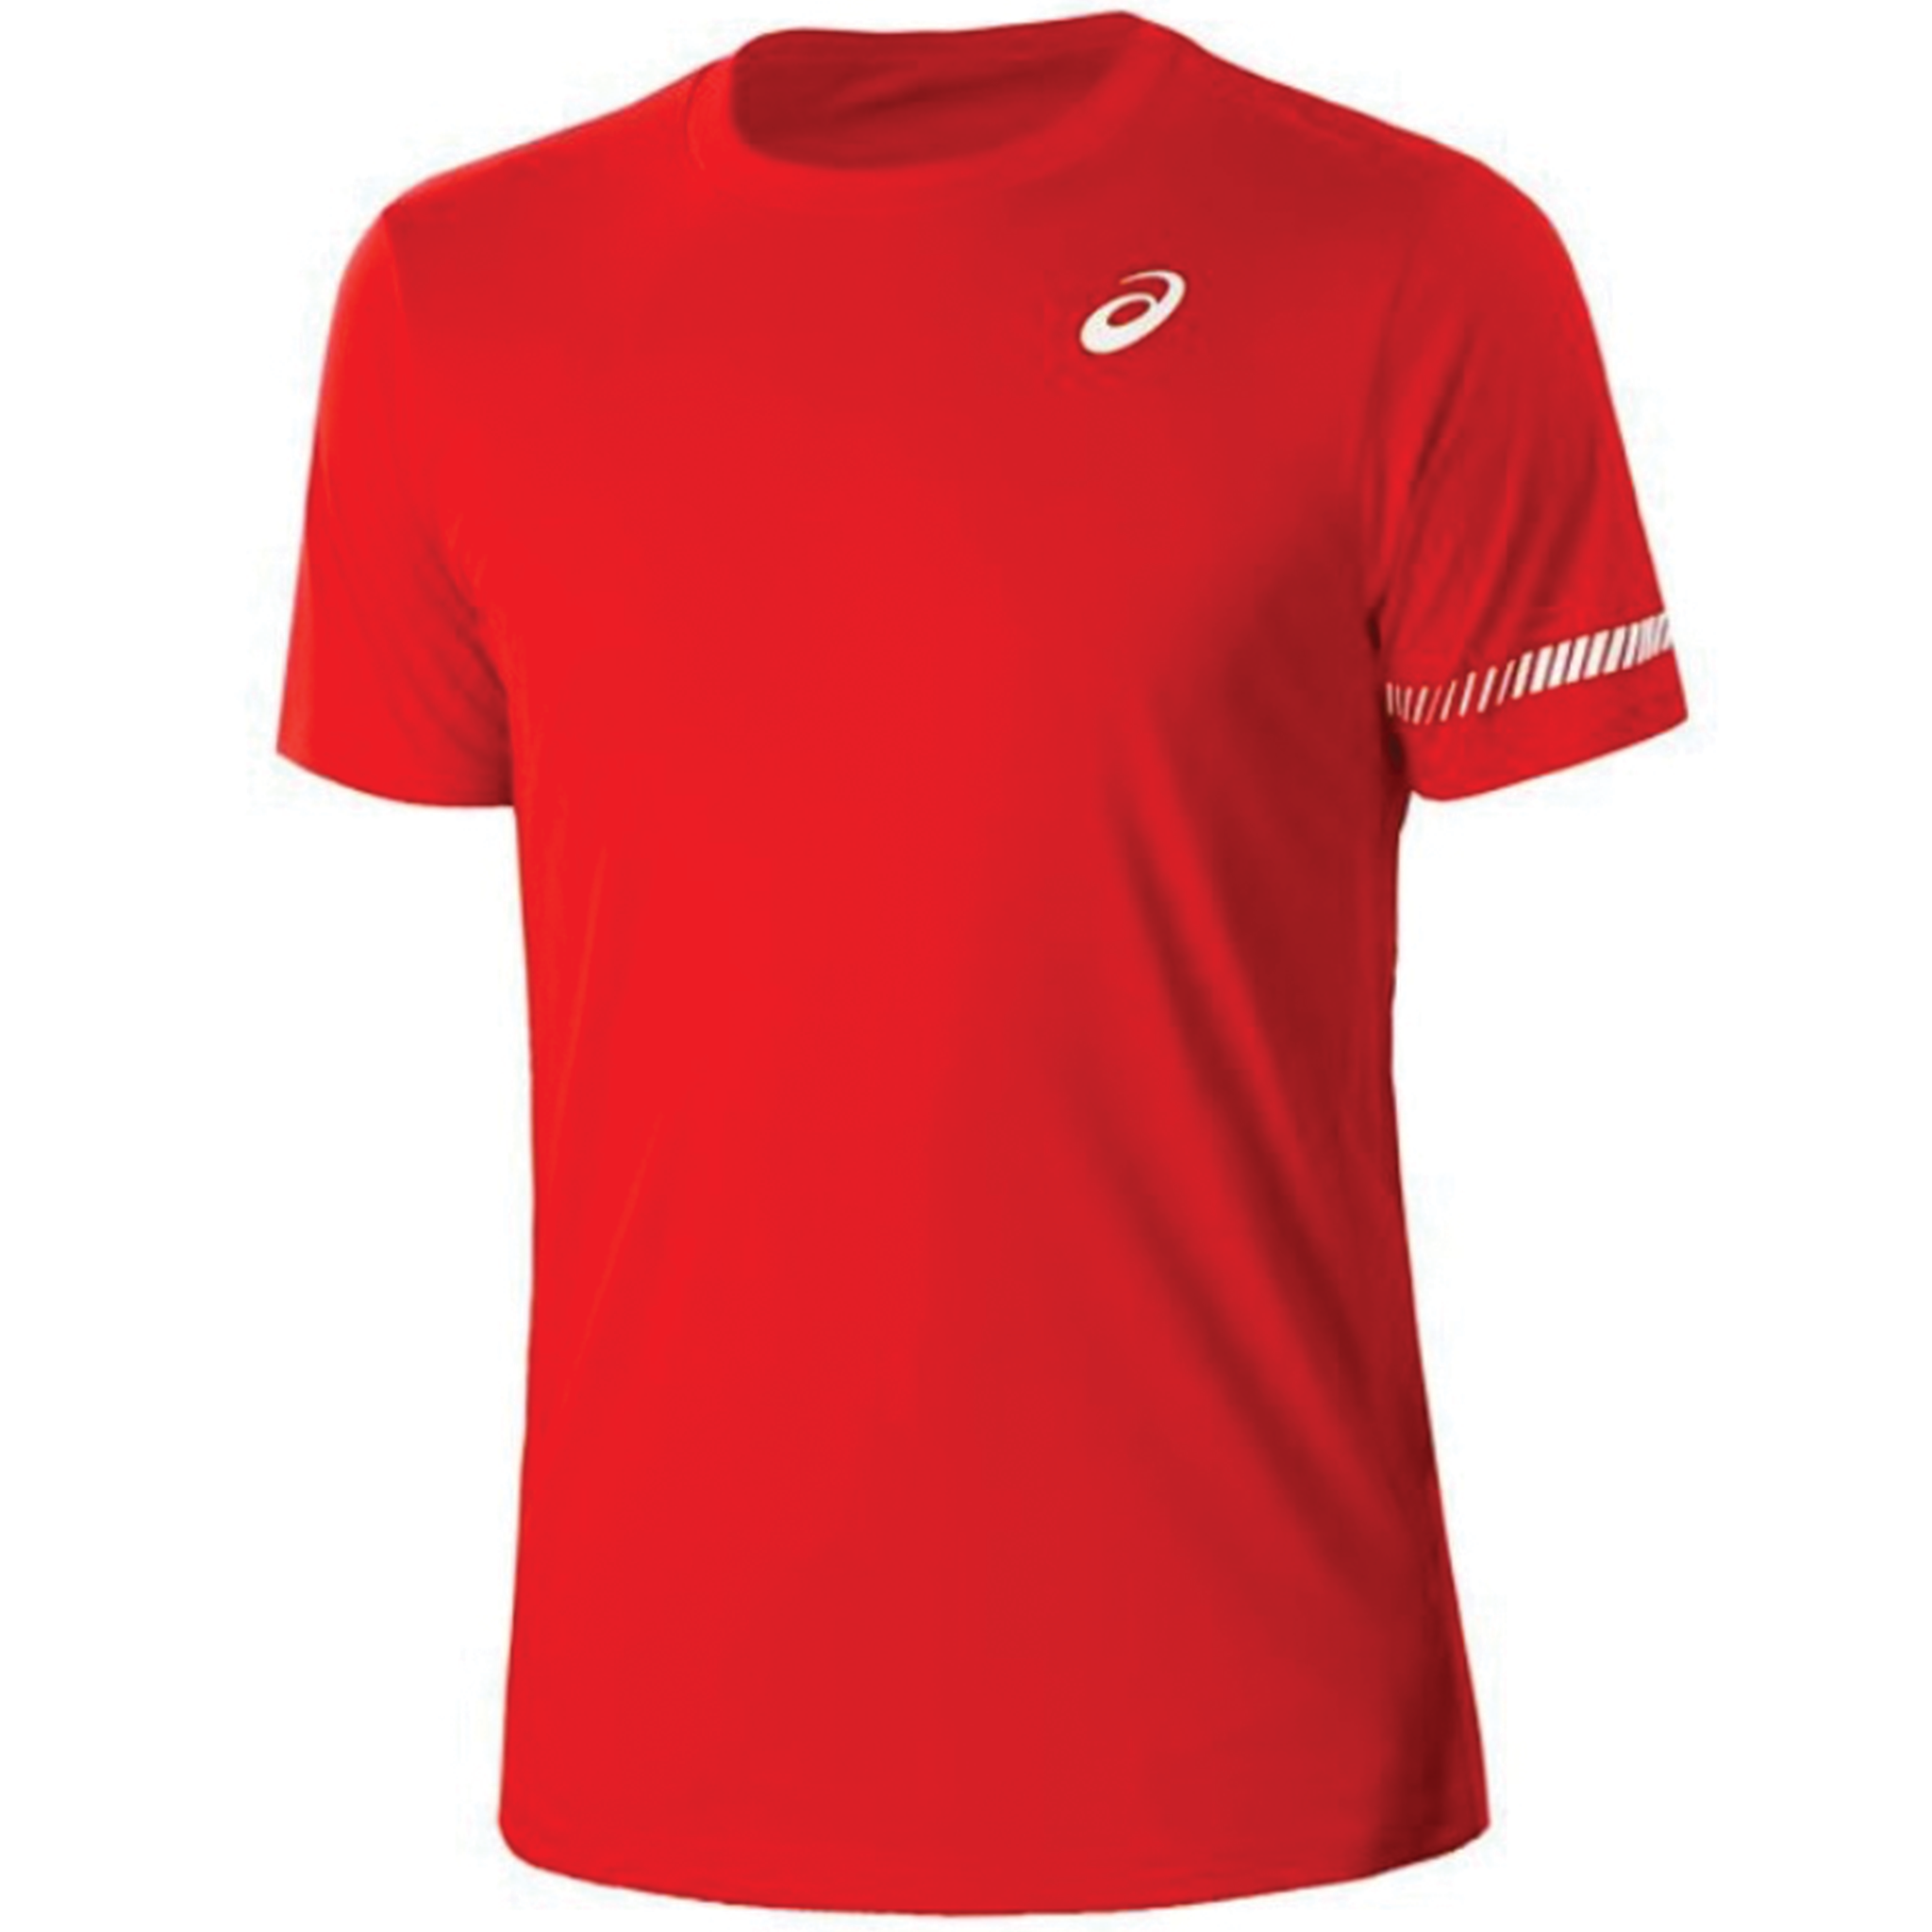 Asics court t-shirt mens - Classic Red